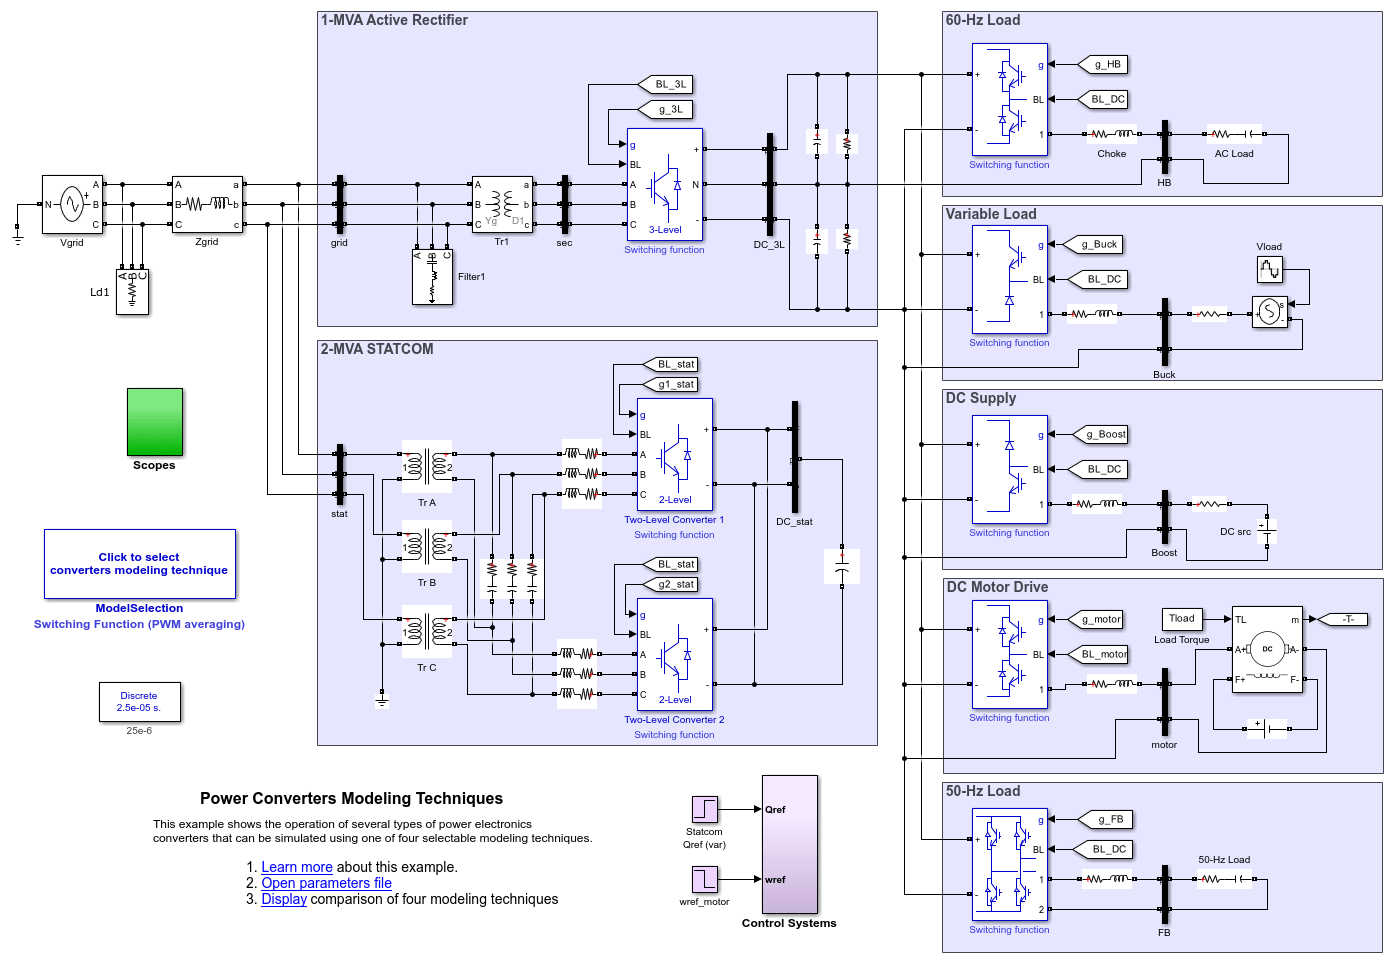 Power Converters Modeling Techniques